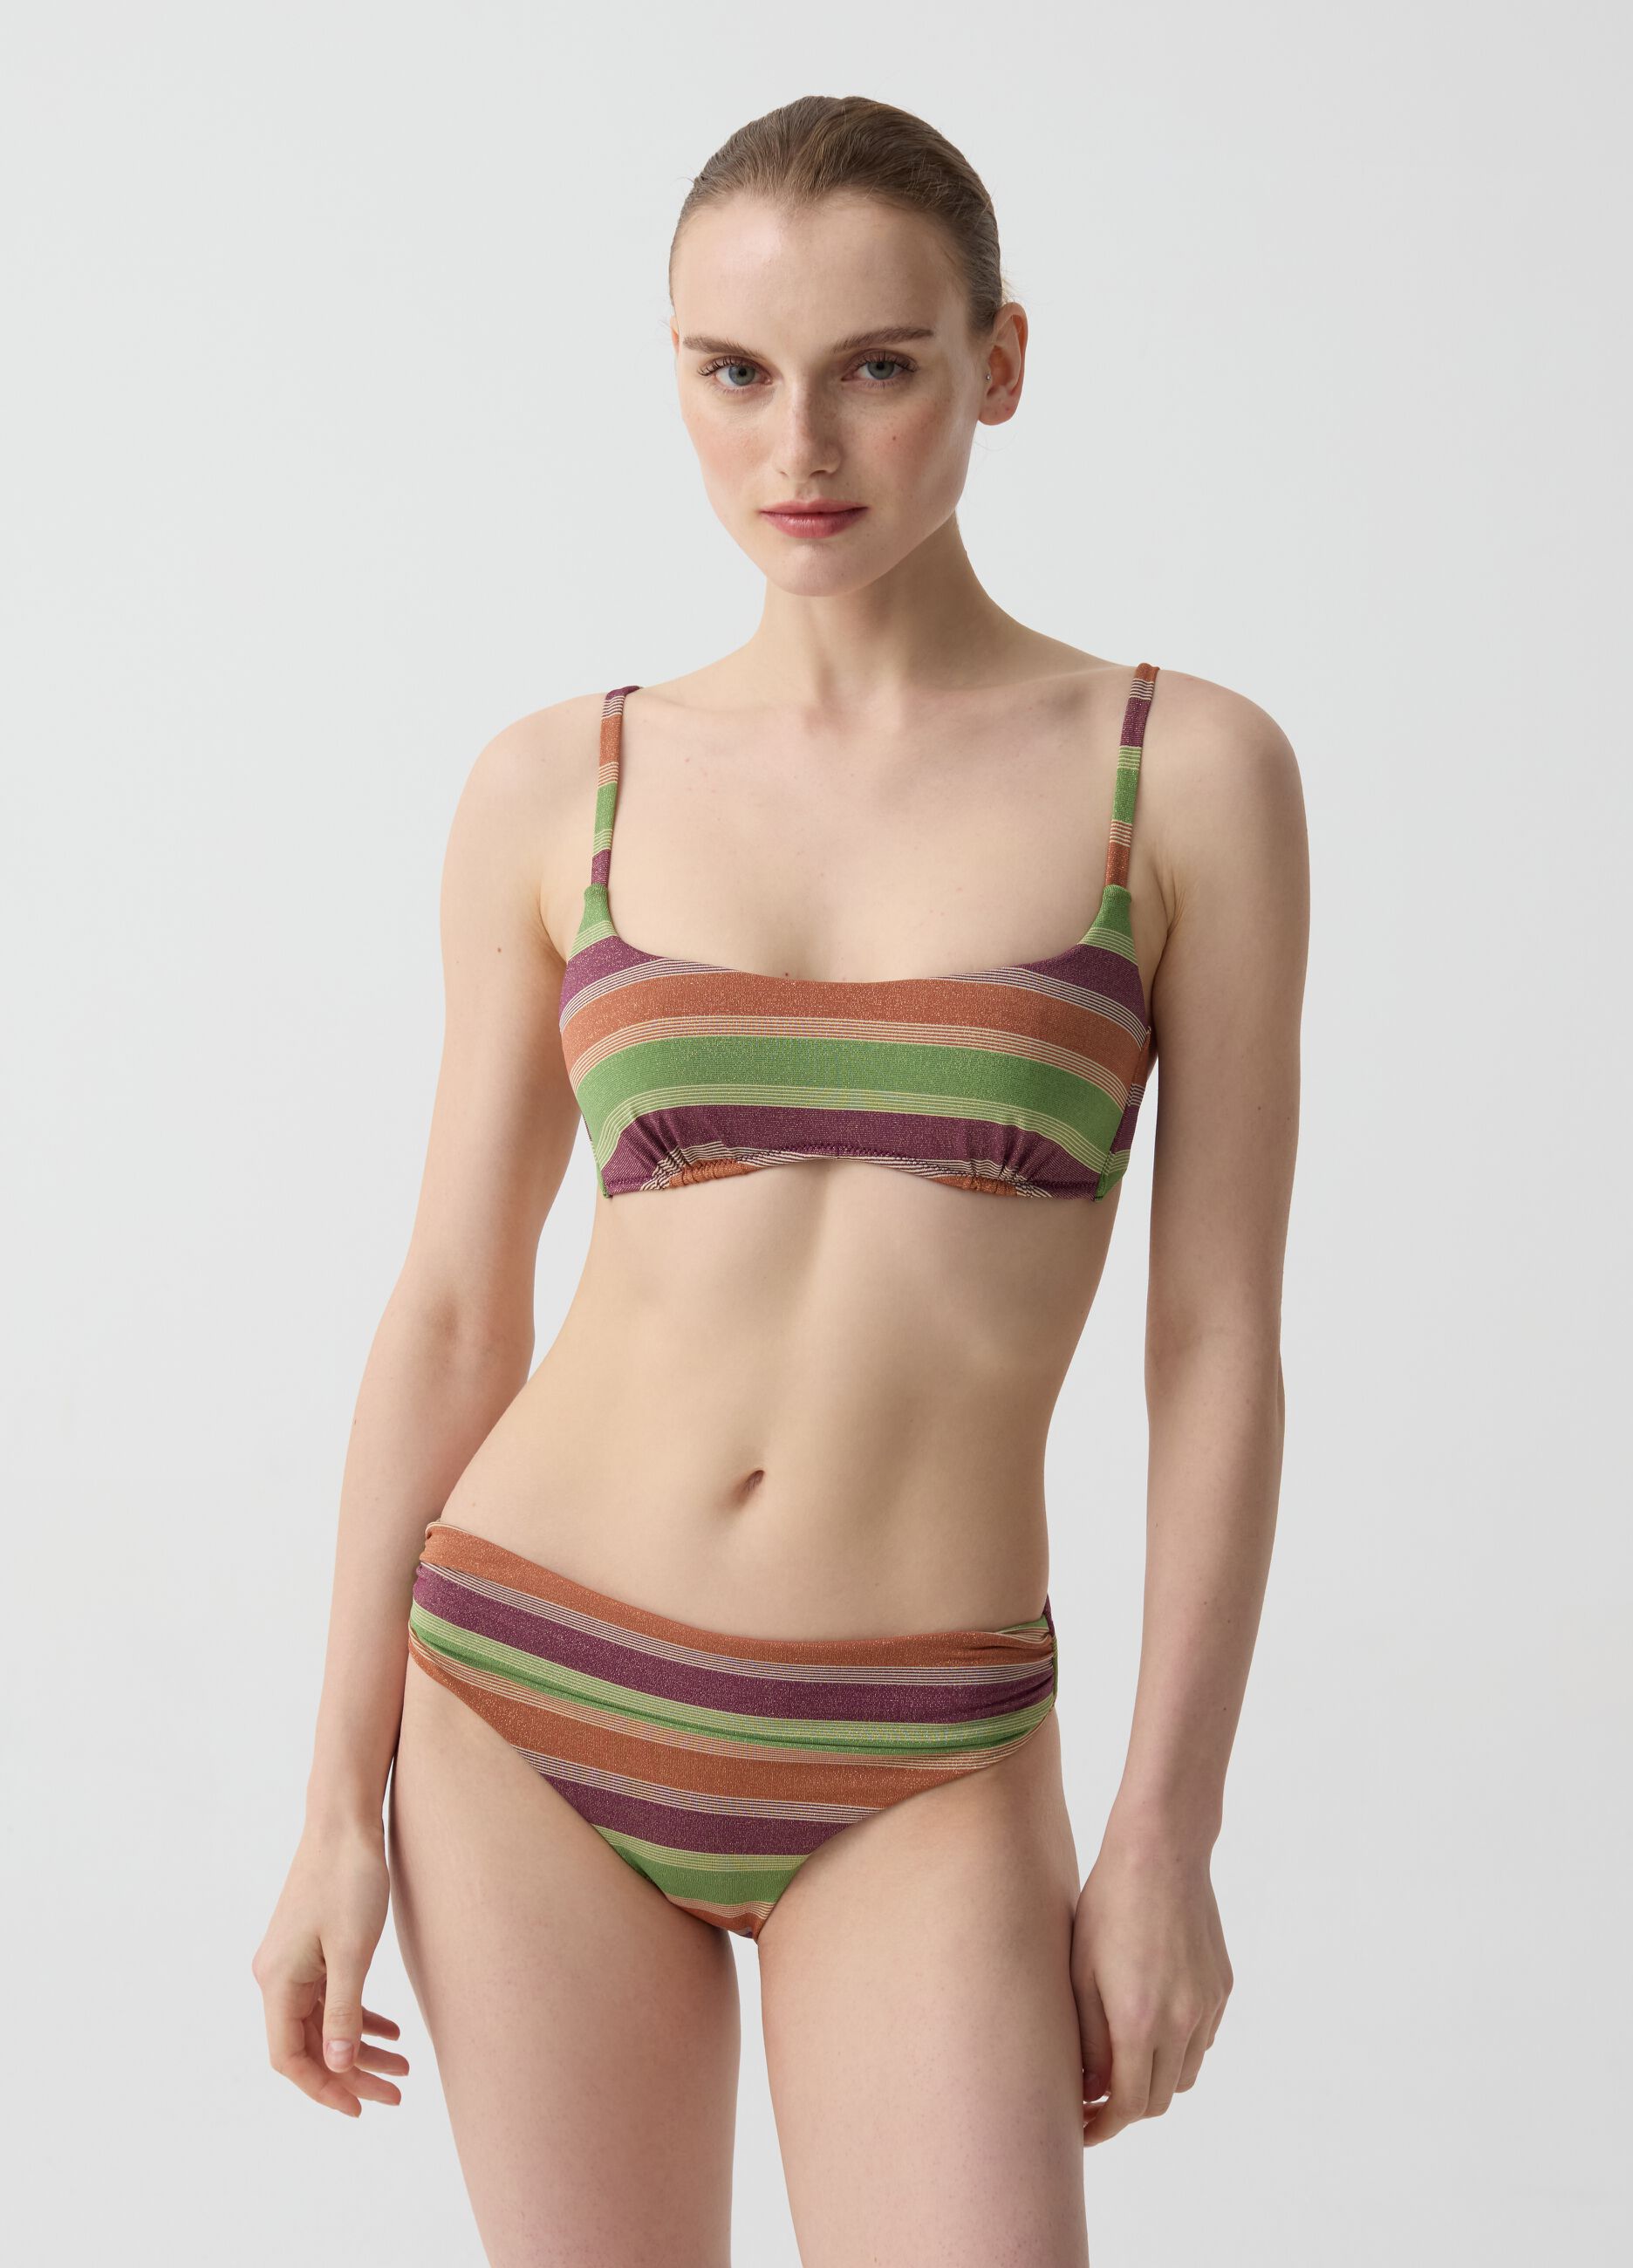 Bralette bikini top with lurex stripes